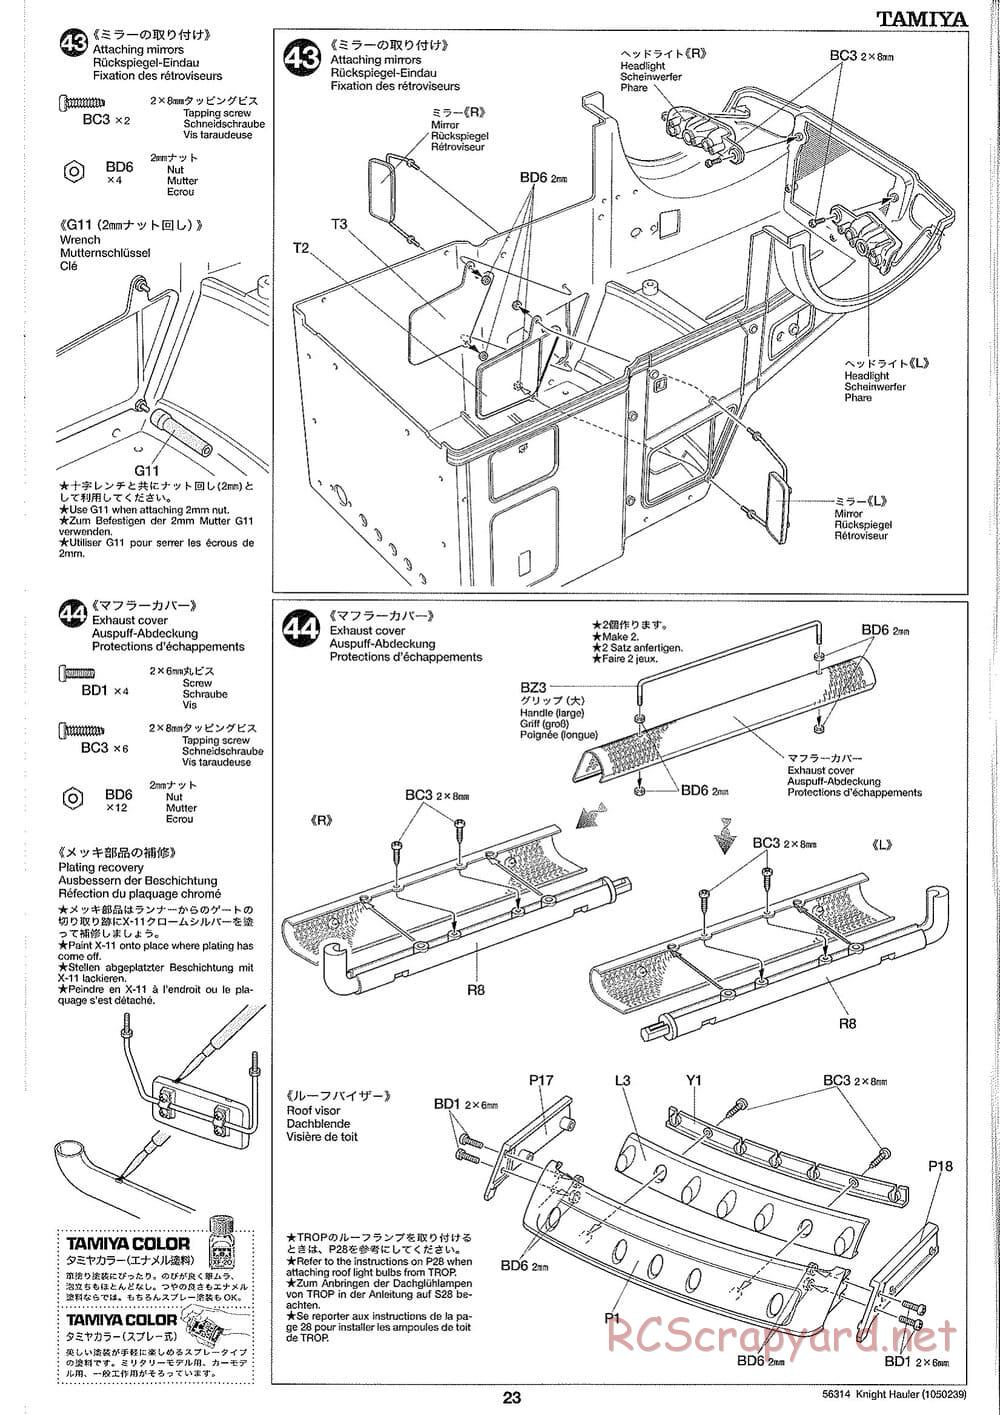 Tamiya - Knight Hauler Tractor Truck Chassis - Manual - Page 23